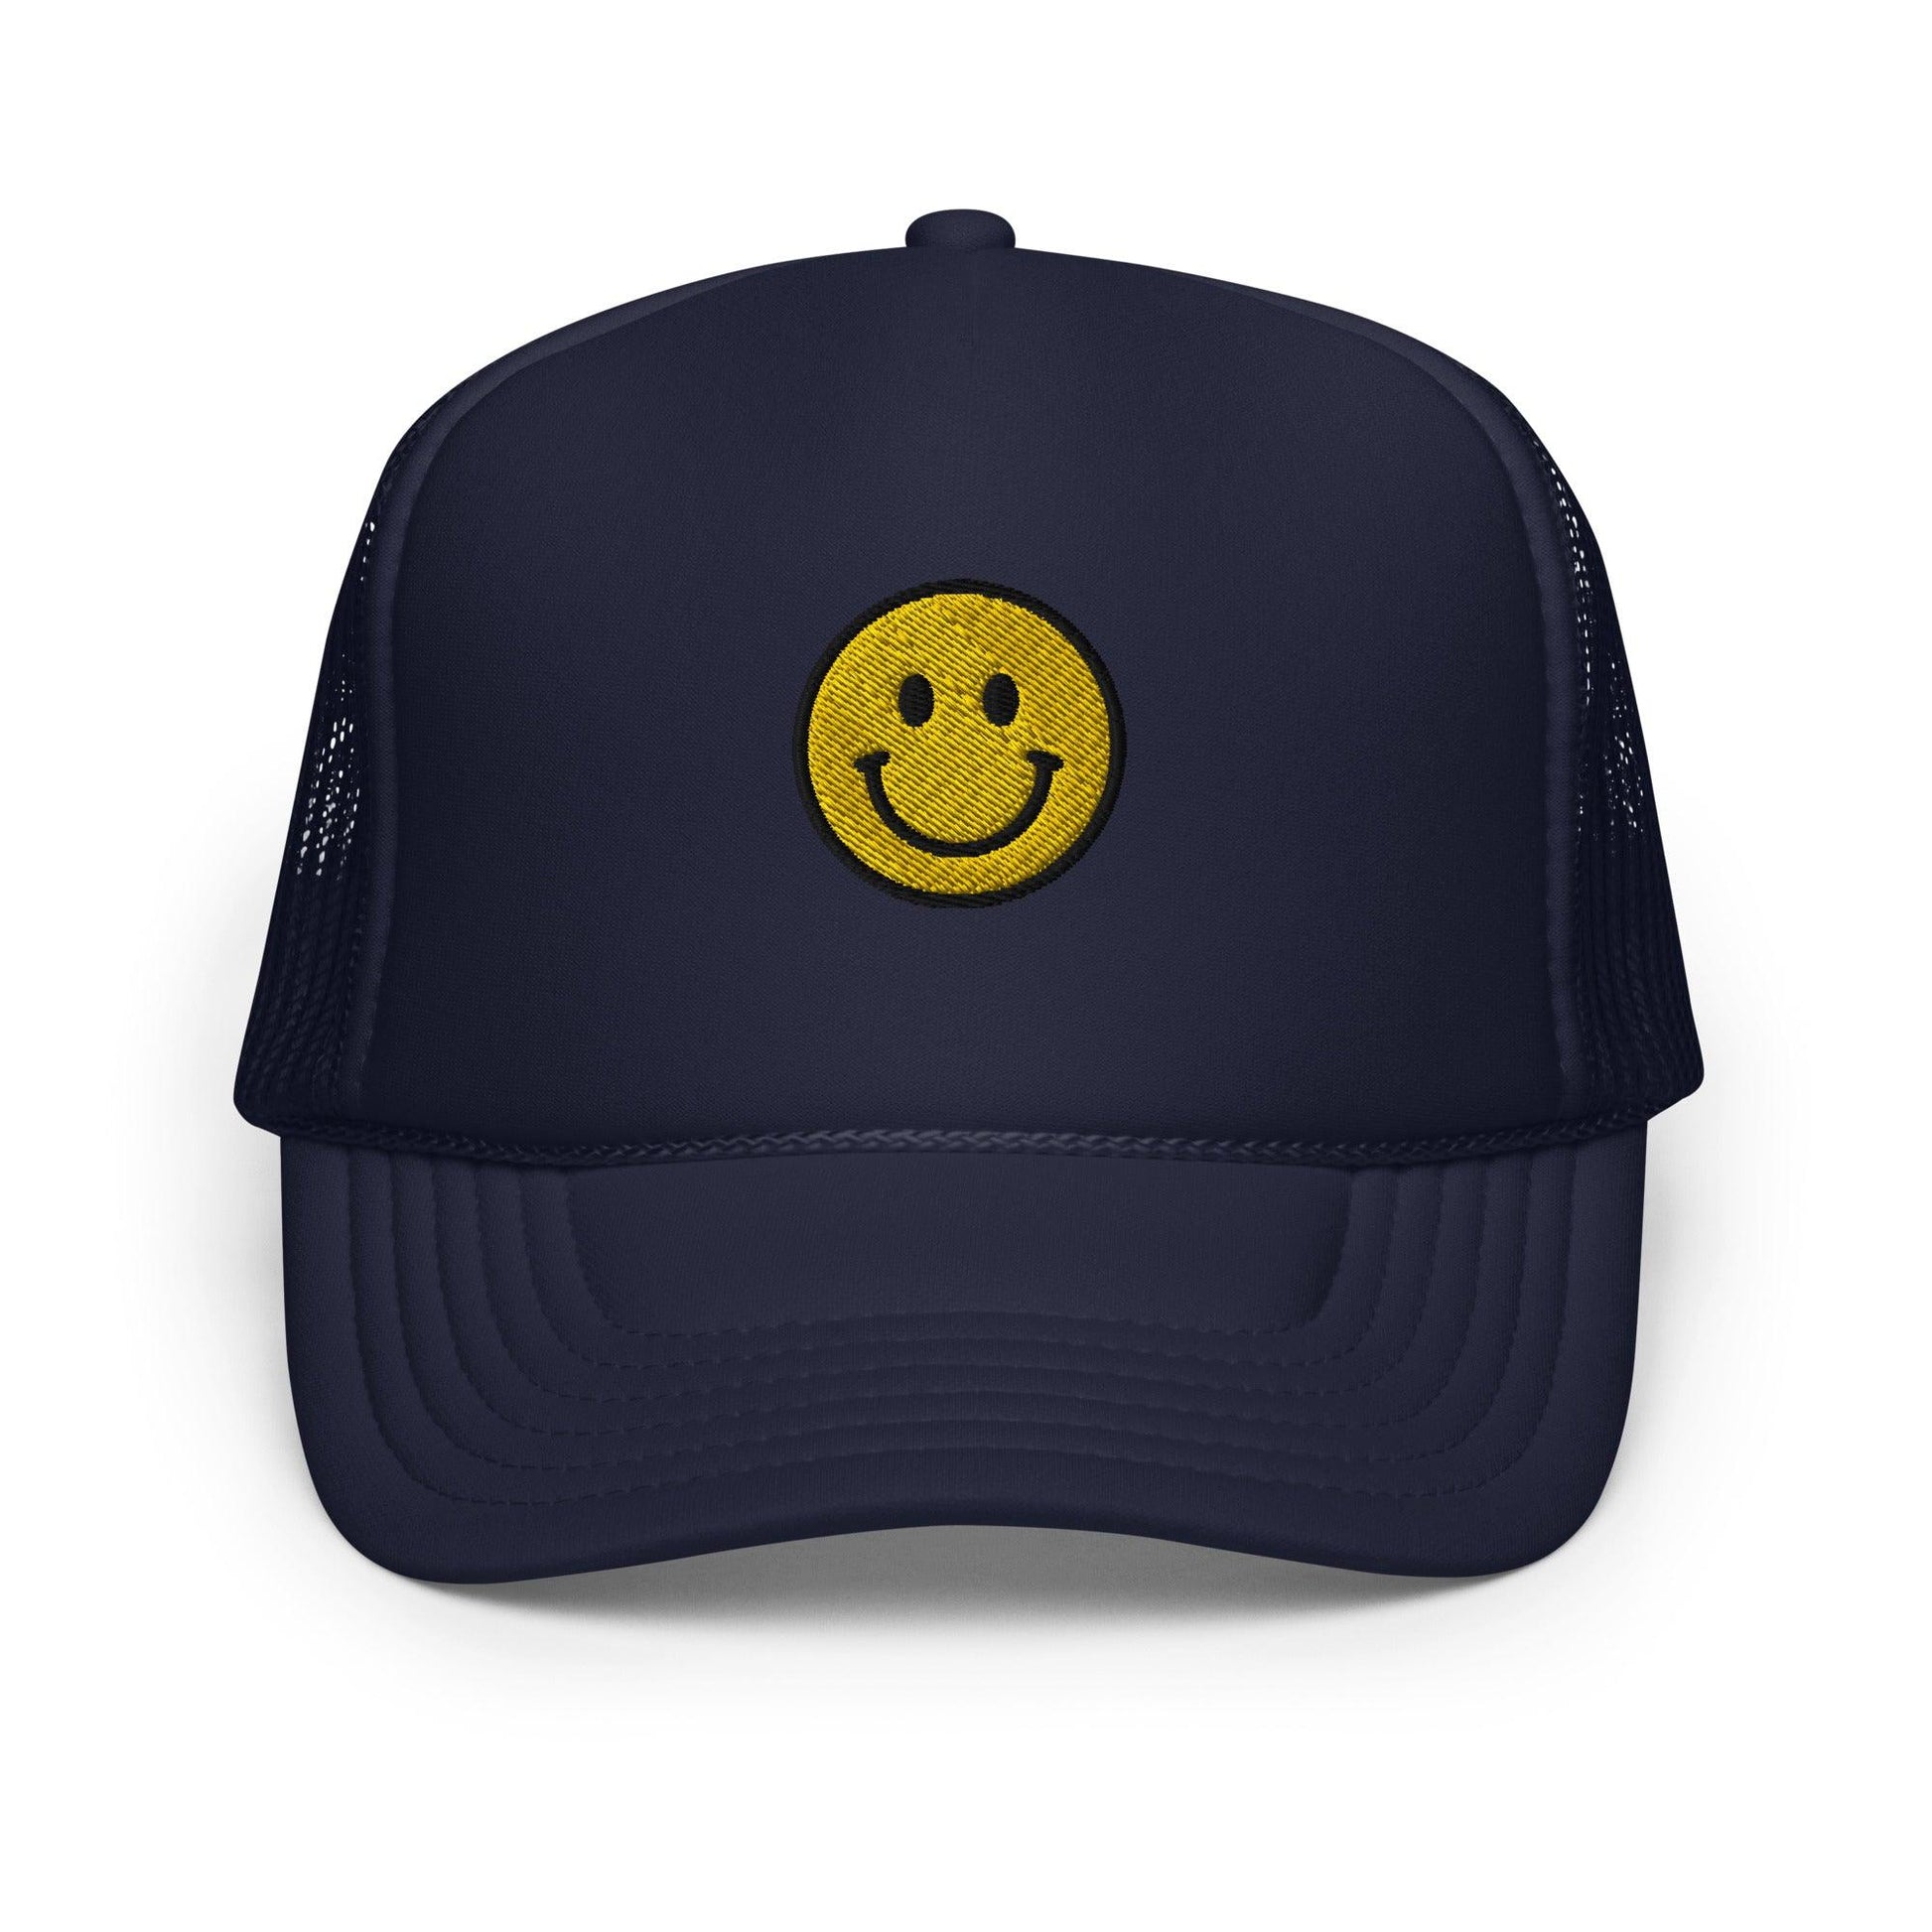 Smiley Face foam trucker hat - Drivestar Clothing